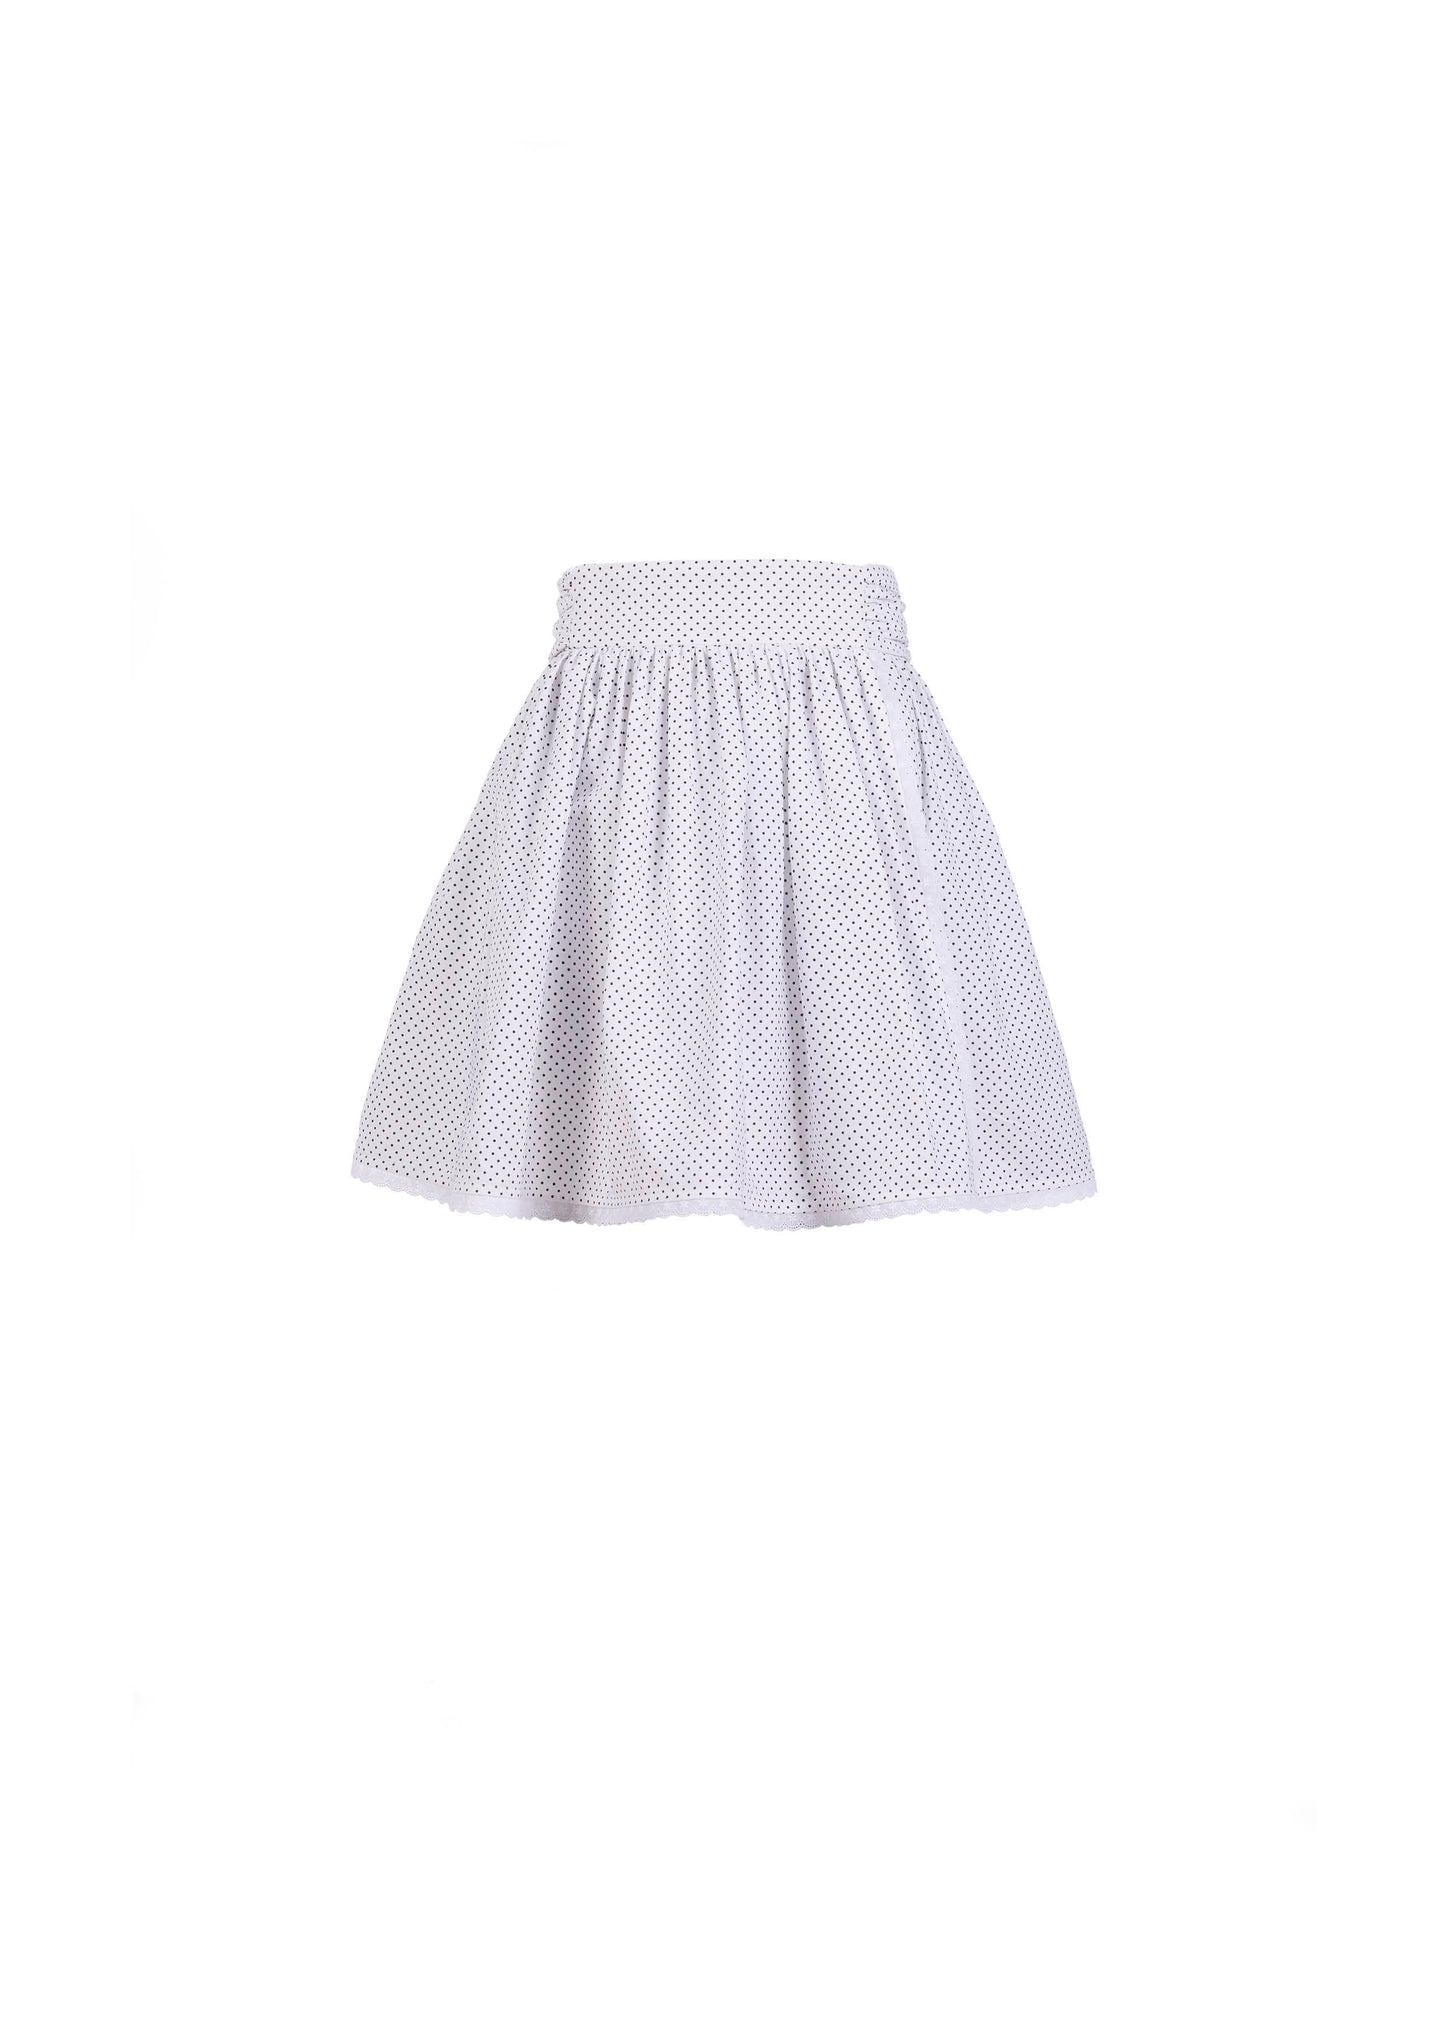 The Mini Pachi Skirt